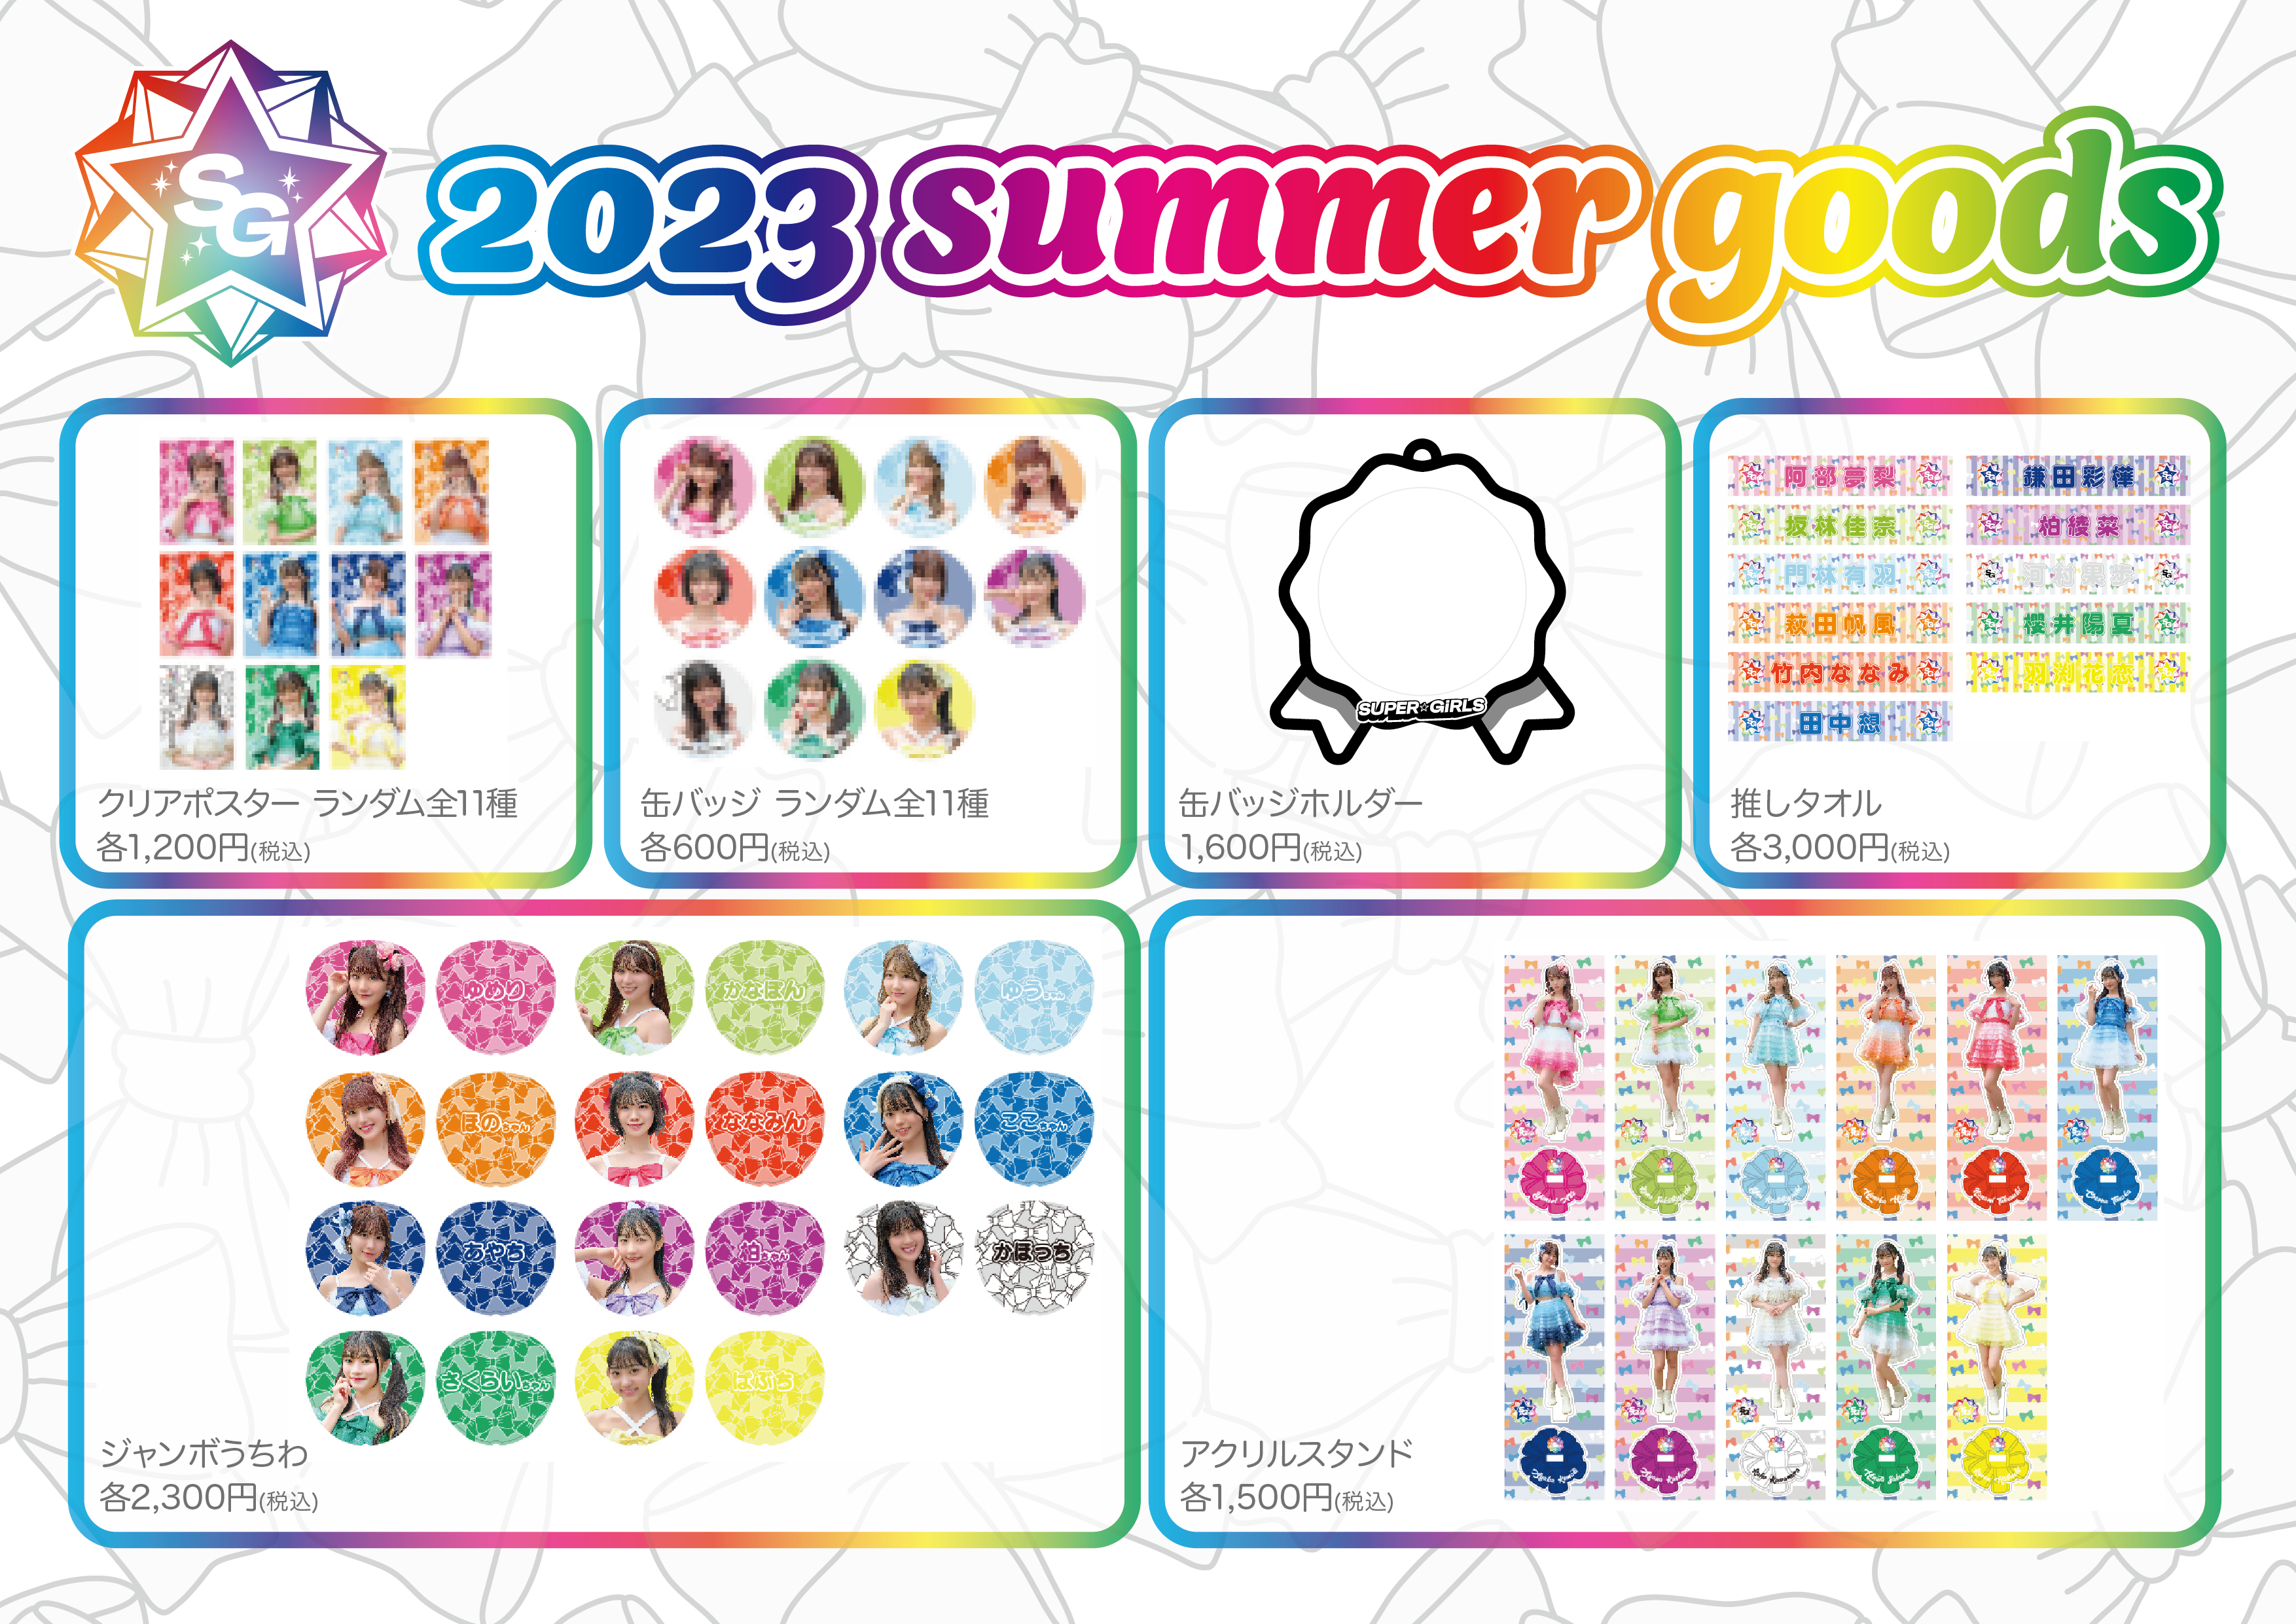 「SUPER☆GiRLS 2023 SUMMER GOODS」販売のお知らせ